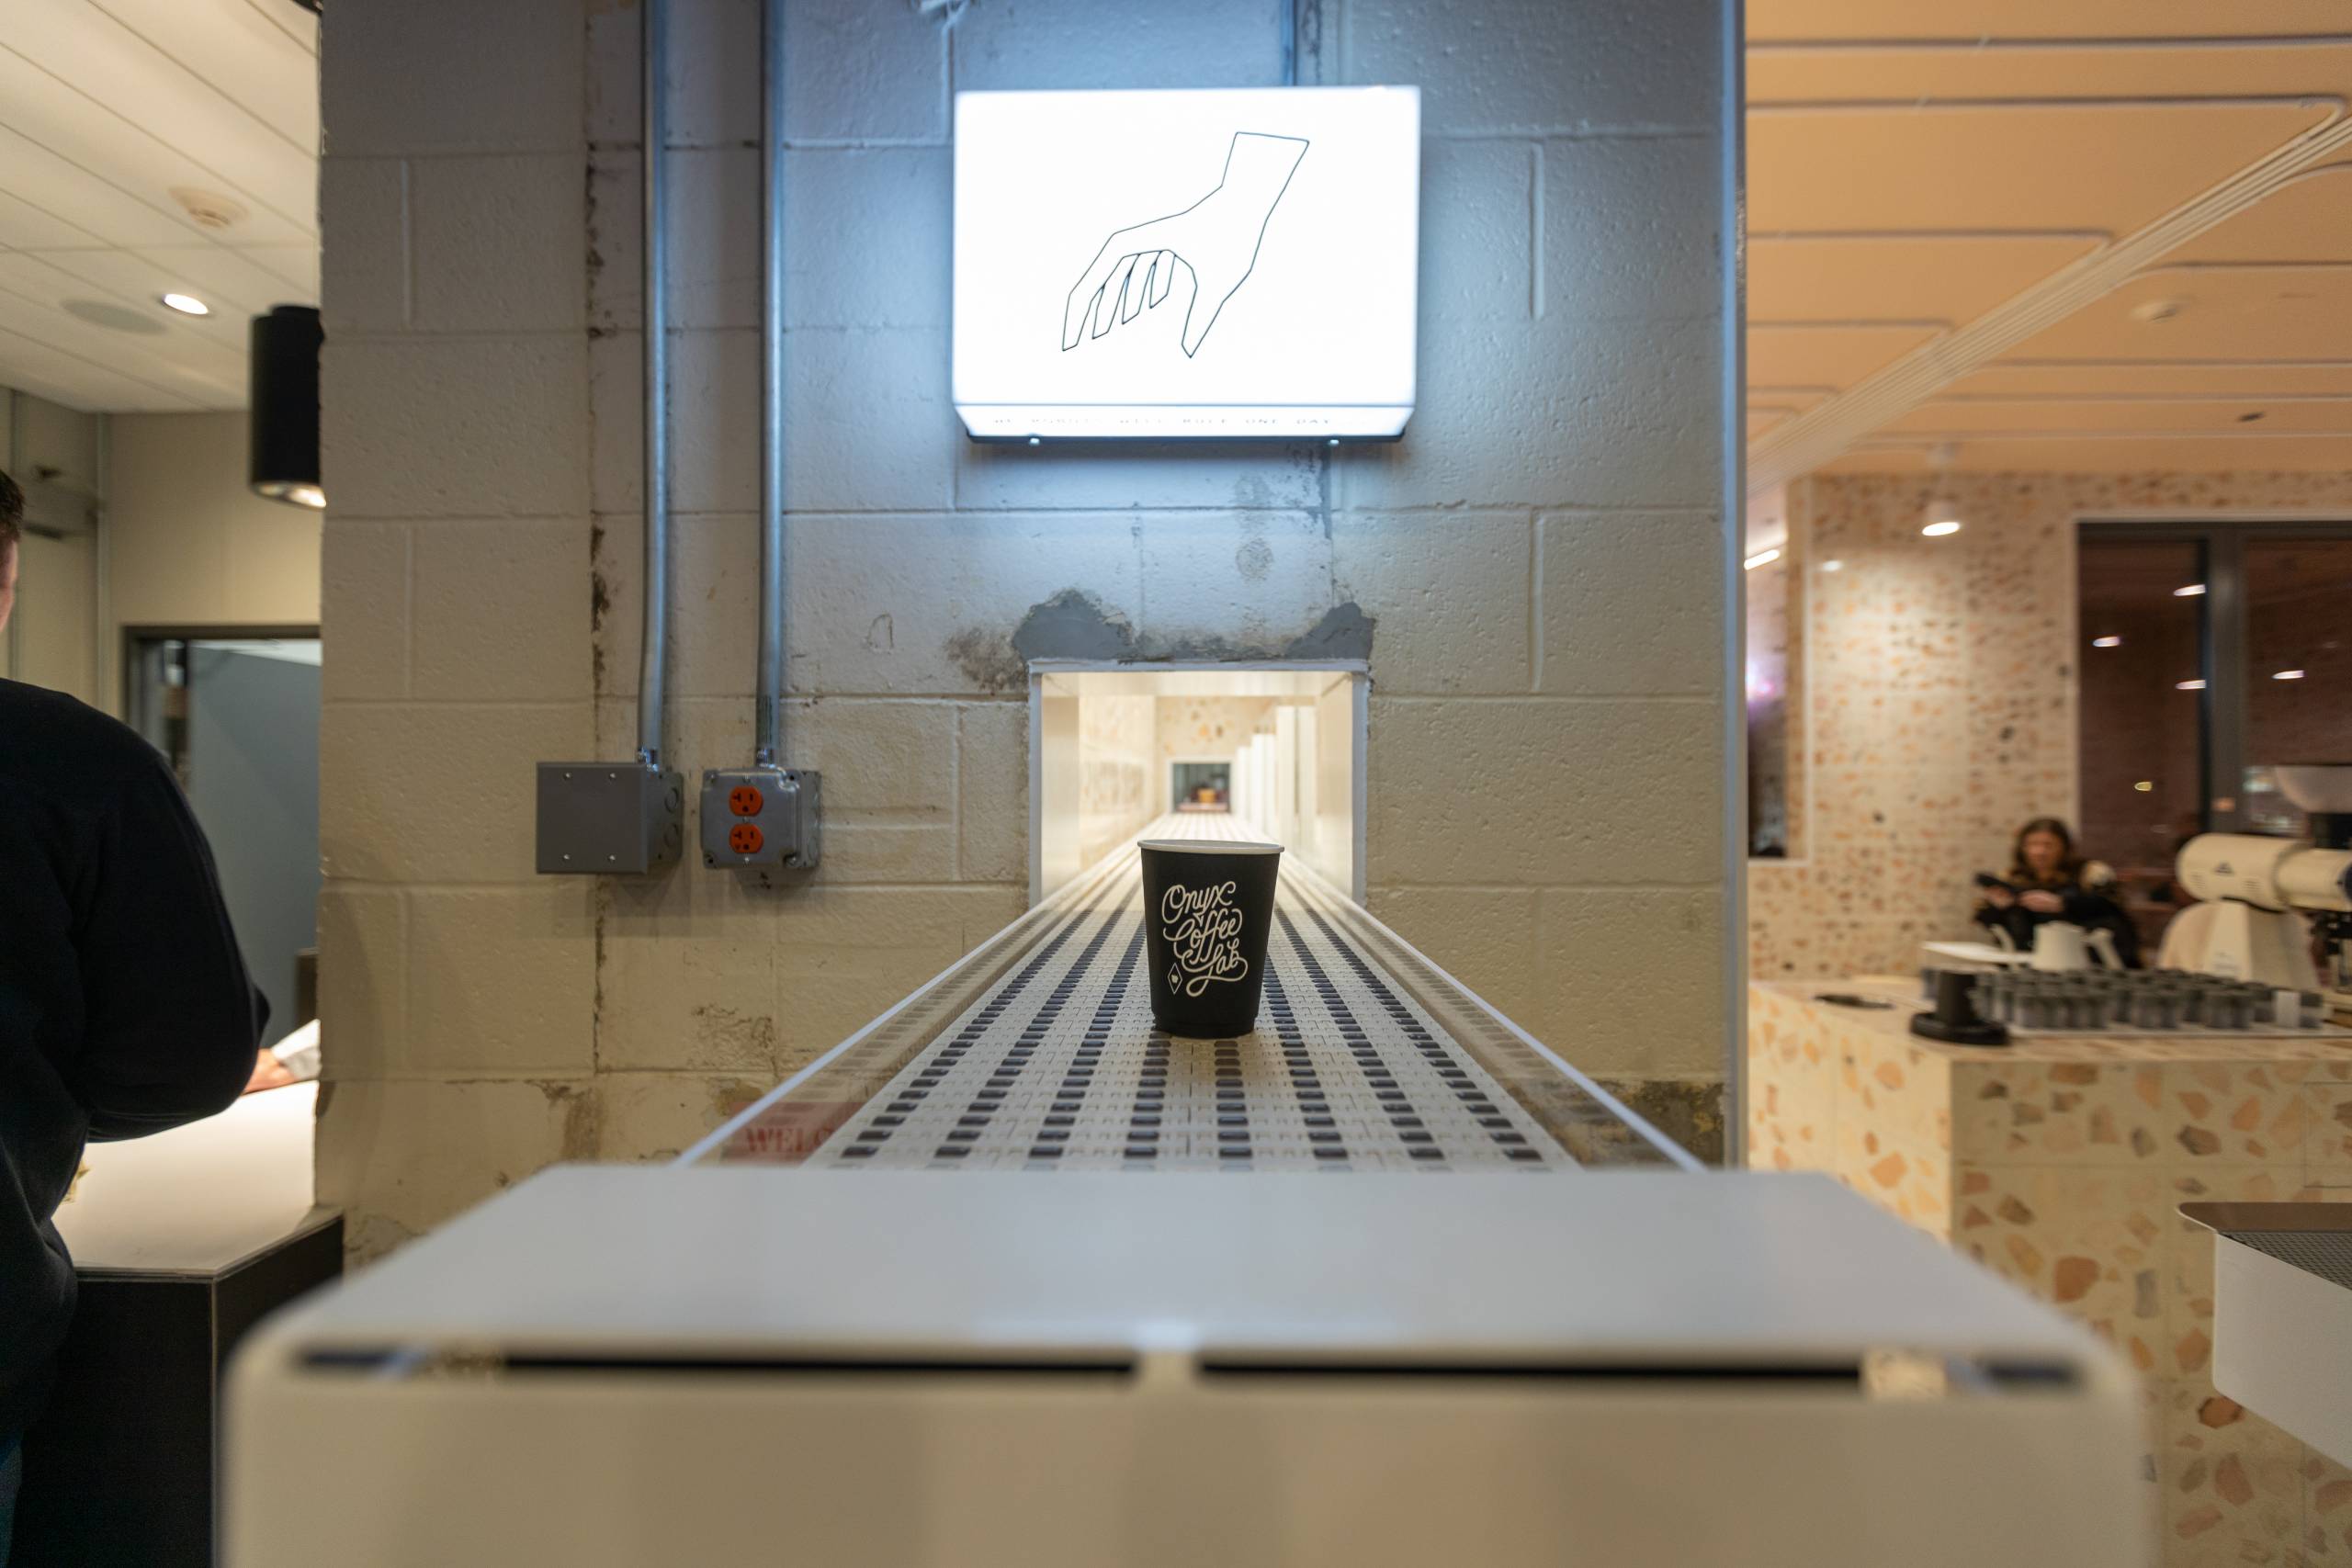 a coffee cup reading onyx coffee lab sits on a conveyor belt